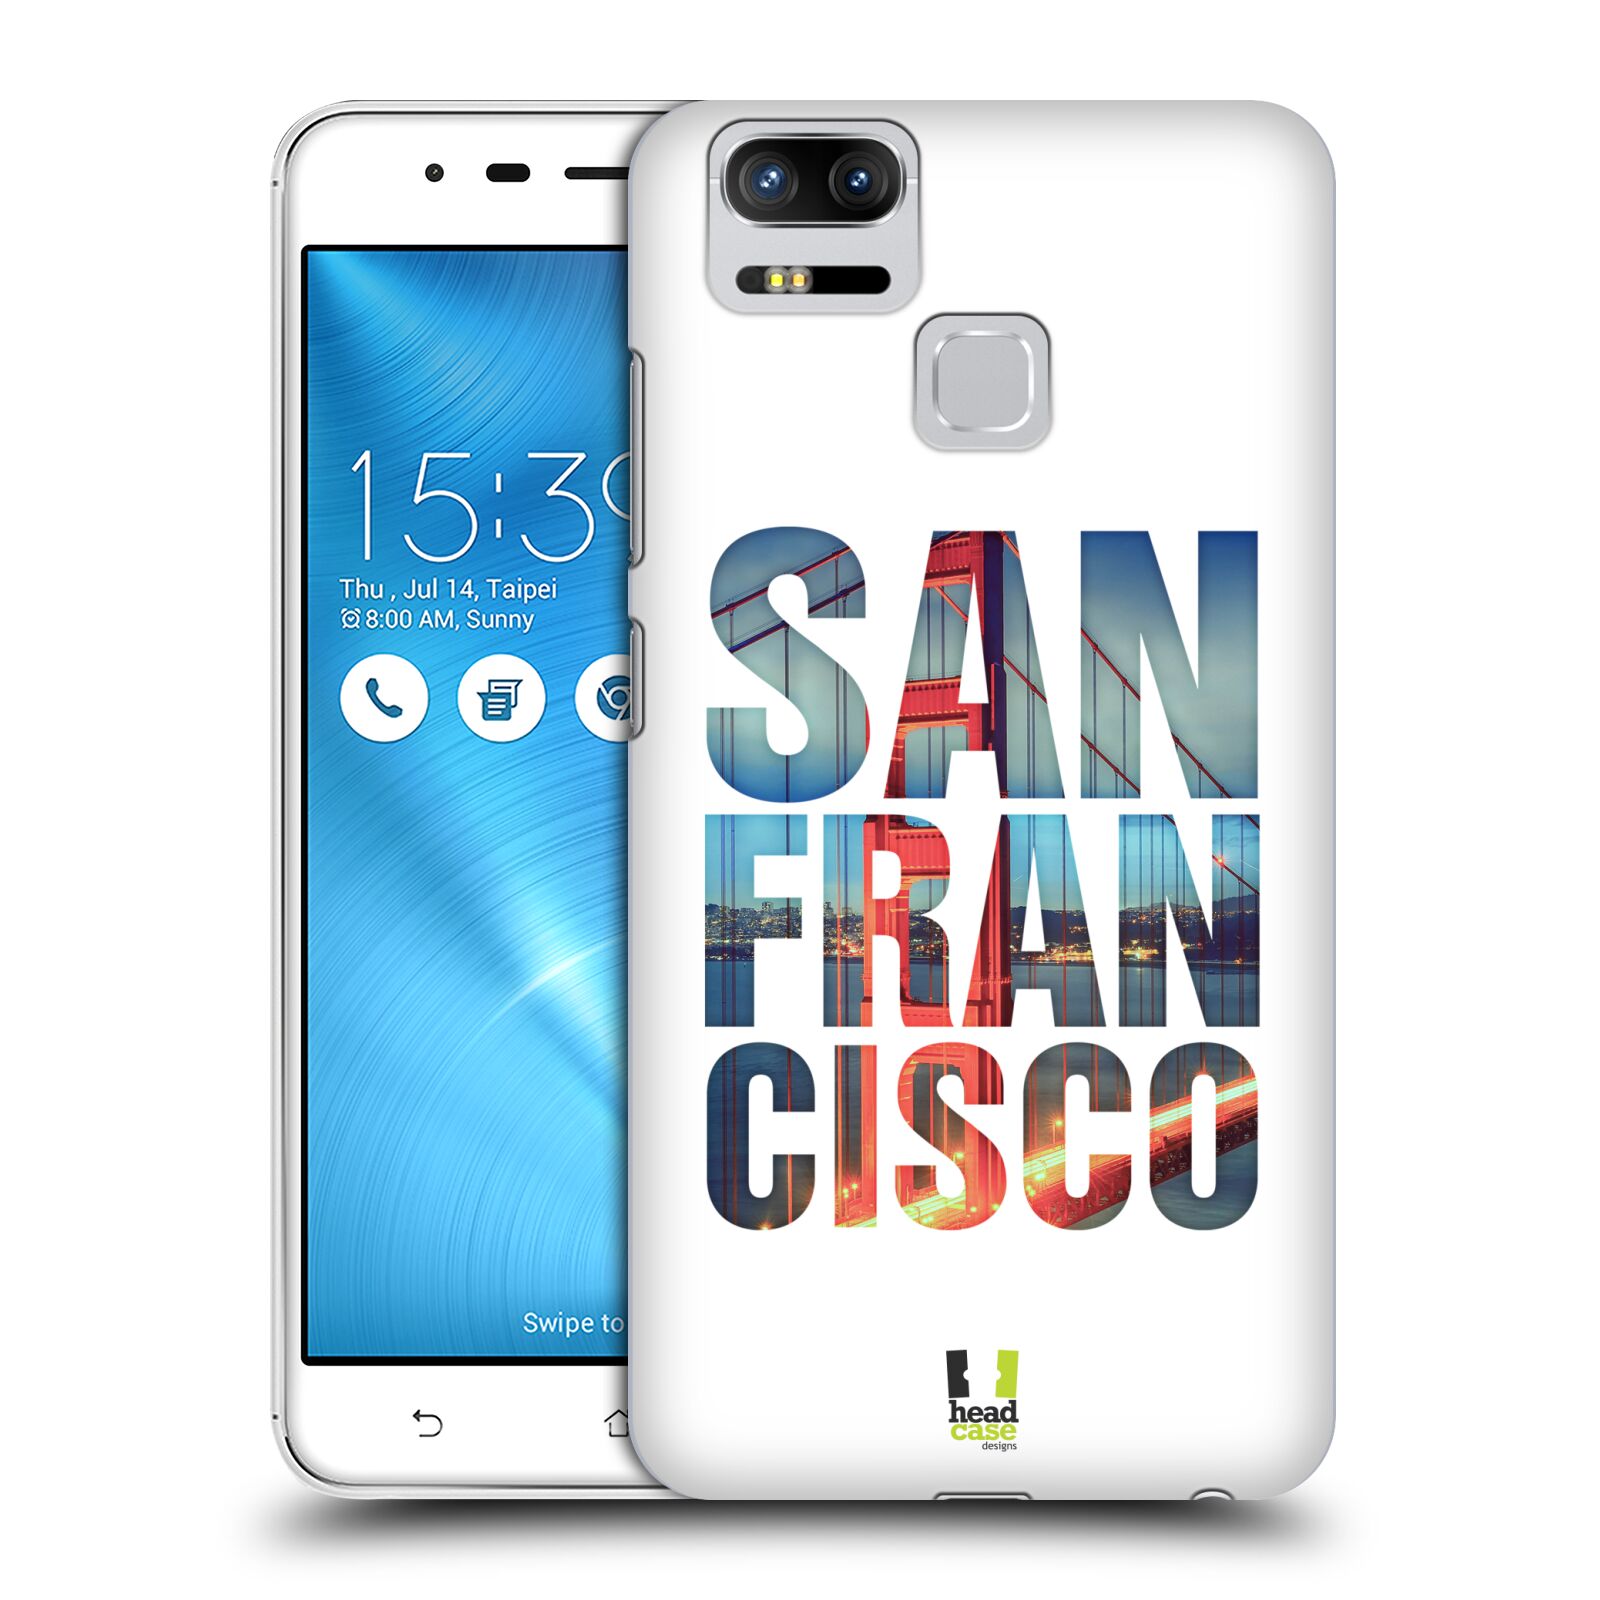 HEAD CASE plastový obal na mobil Asus Zenfone 3 Zoom ZE553KL vzor Města foto a nadpis USA, SAN FRANCISCO, MOST